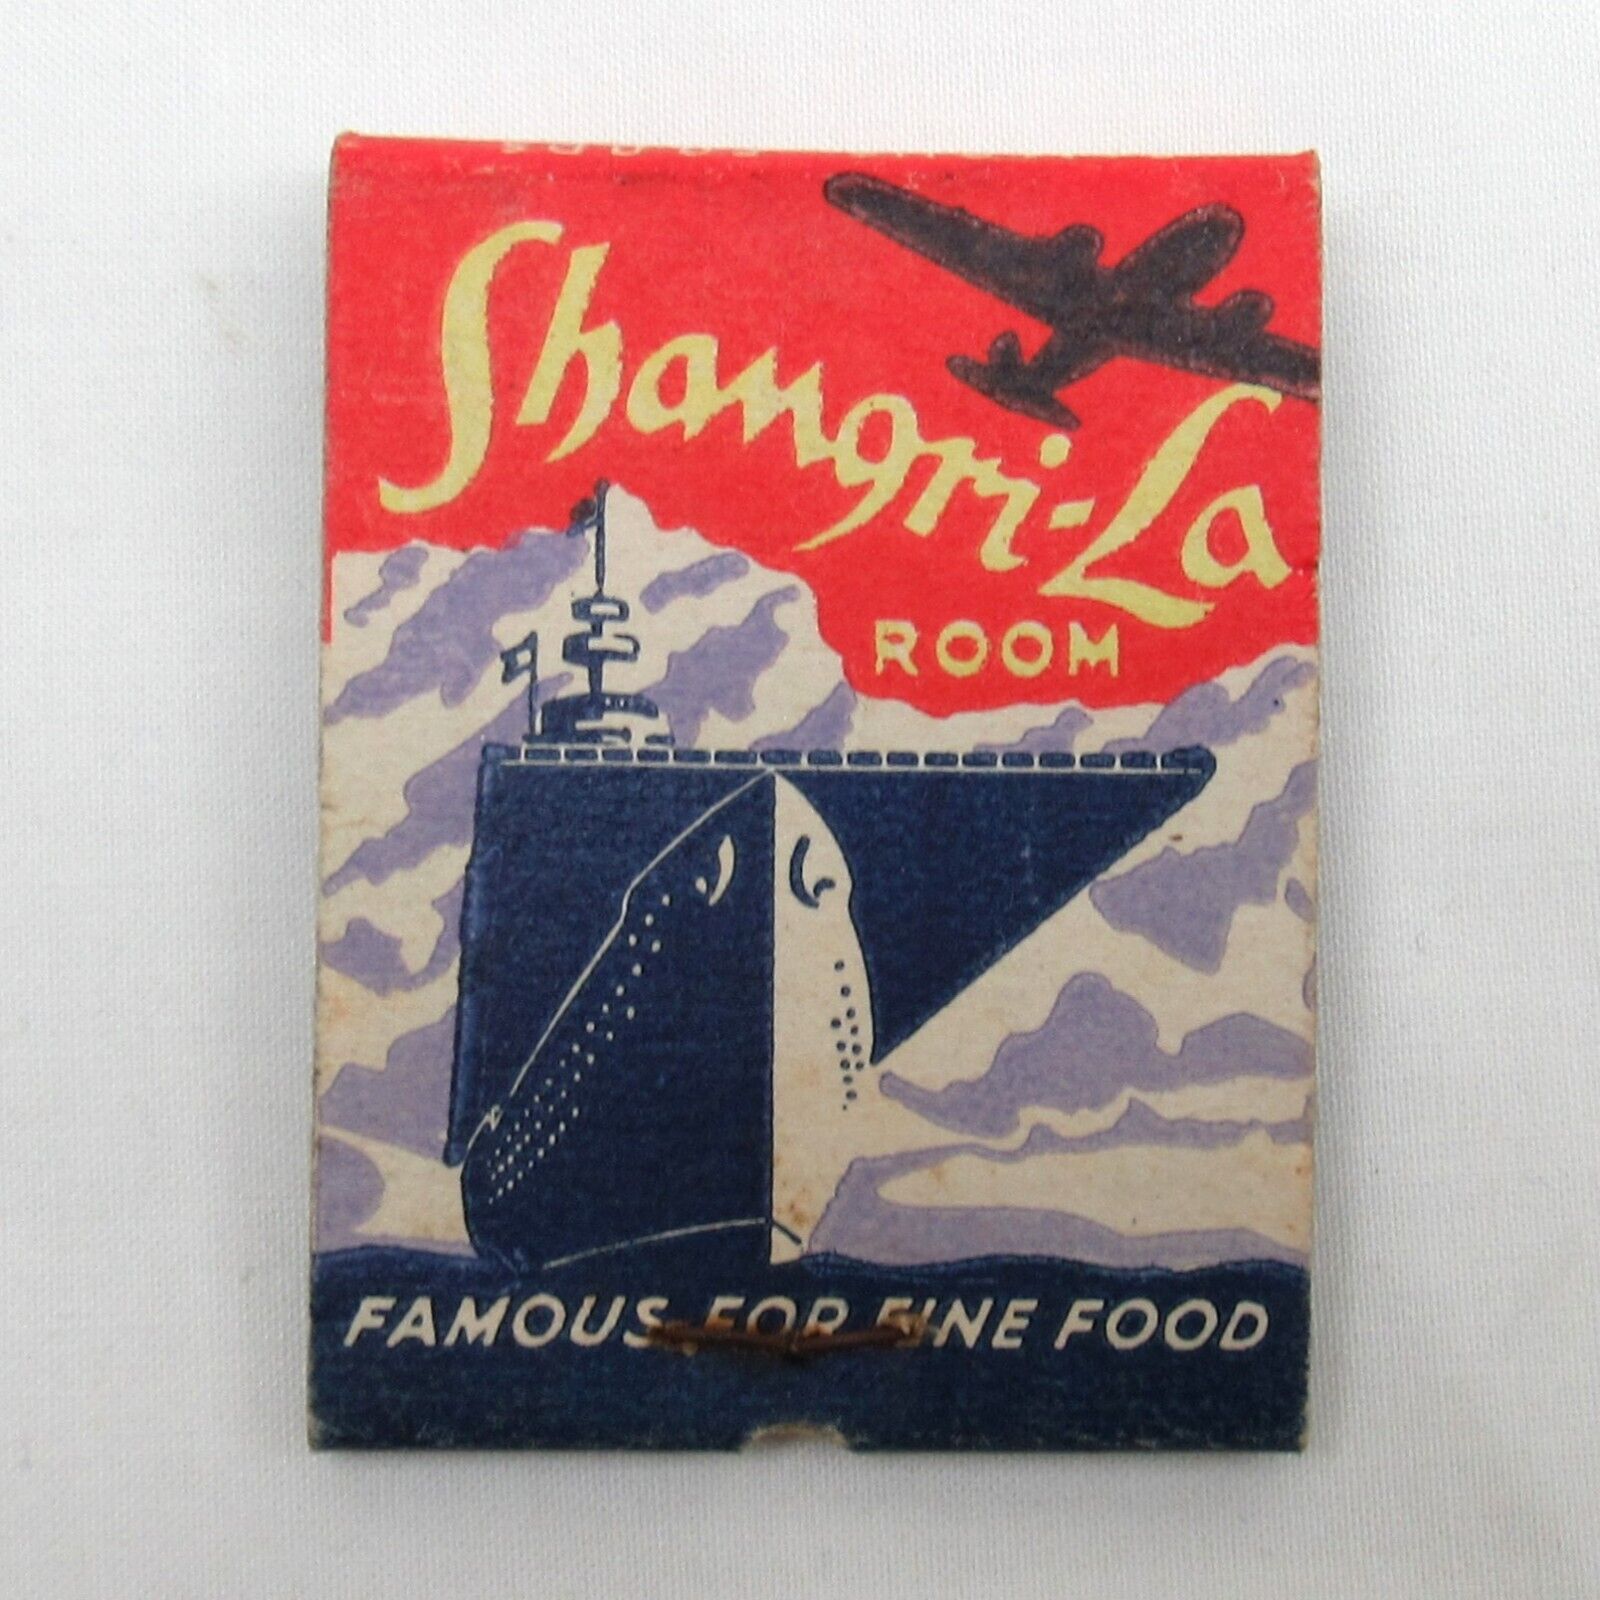 1930s Curly's Shangri-La Room Matchbook Cover unstruck Minneapolis MN 1940s